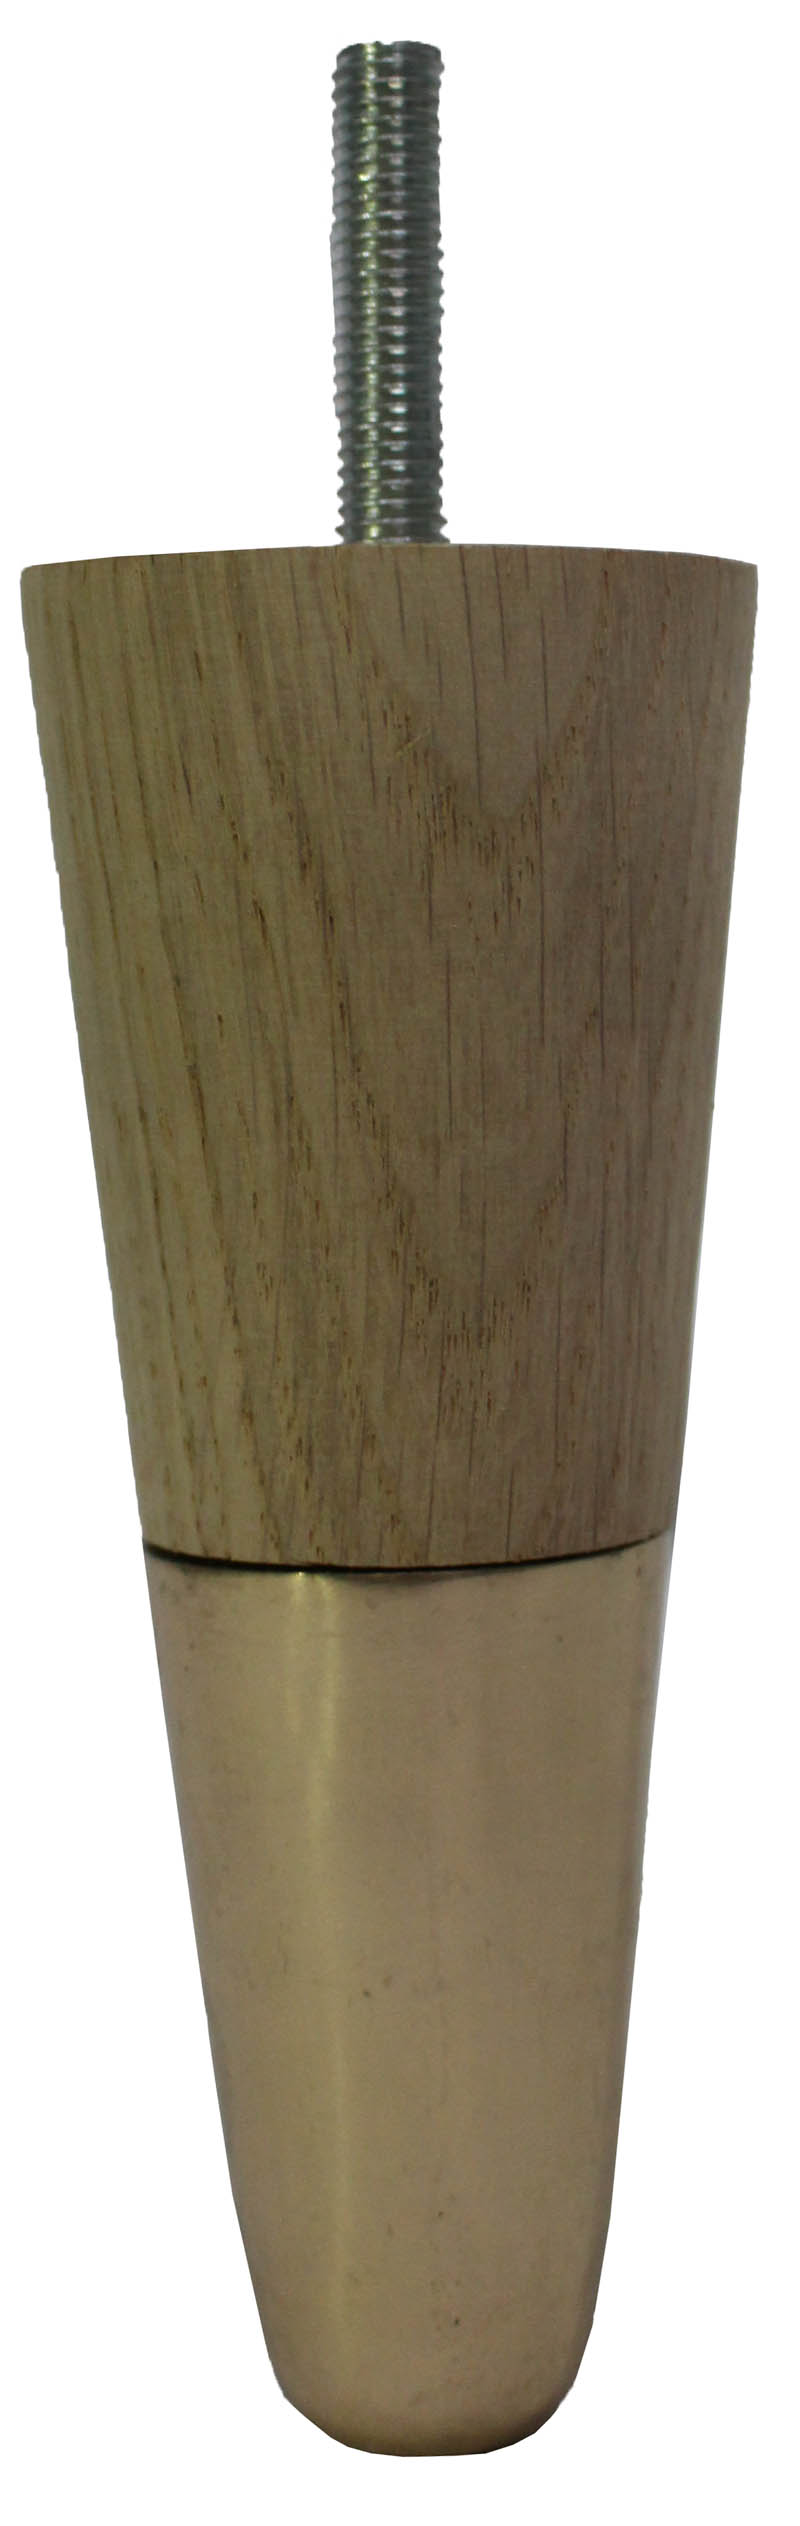 Apple Solid Oak Furniture Legs - Raw Finish - Brass Slipper Cups - Set of 4